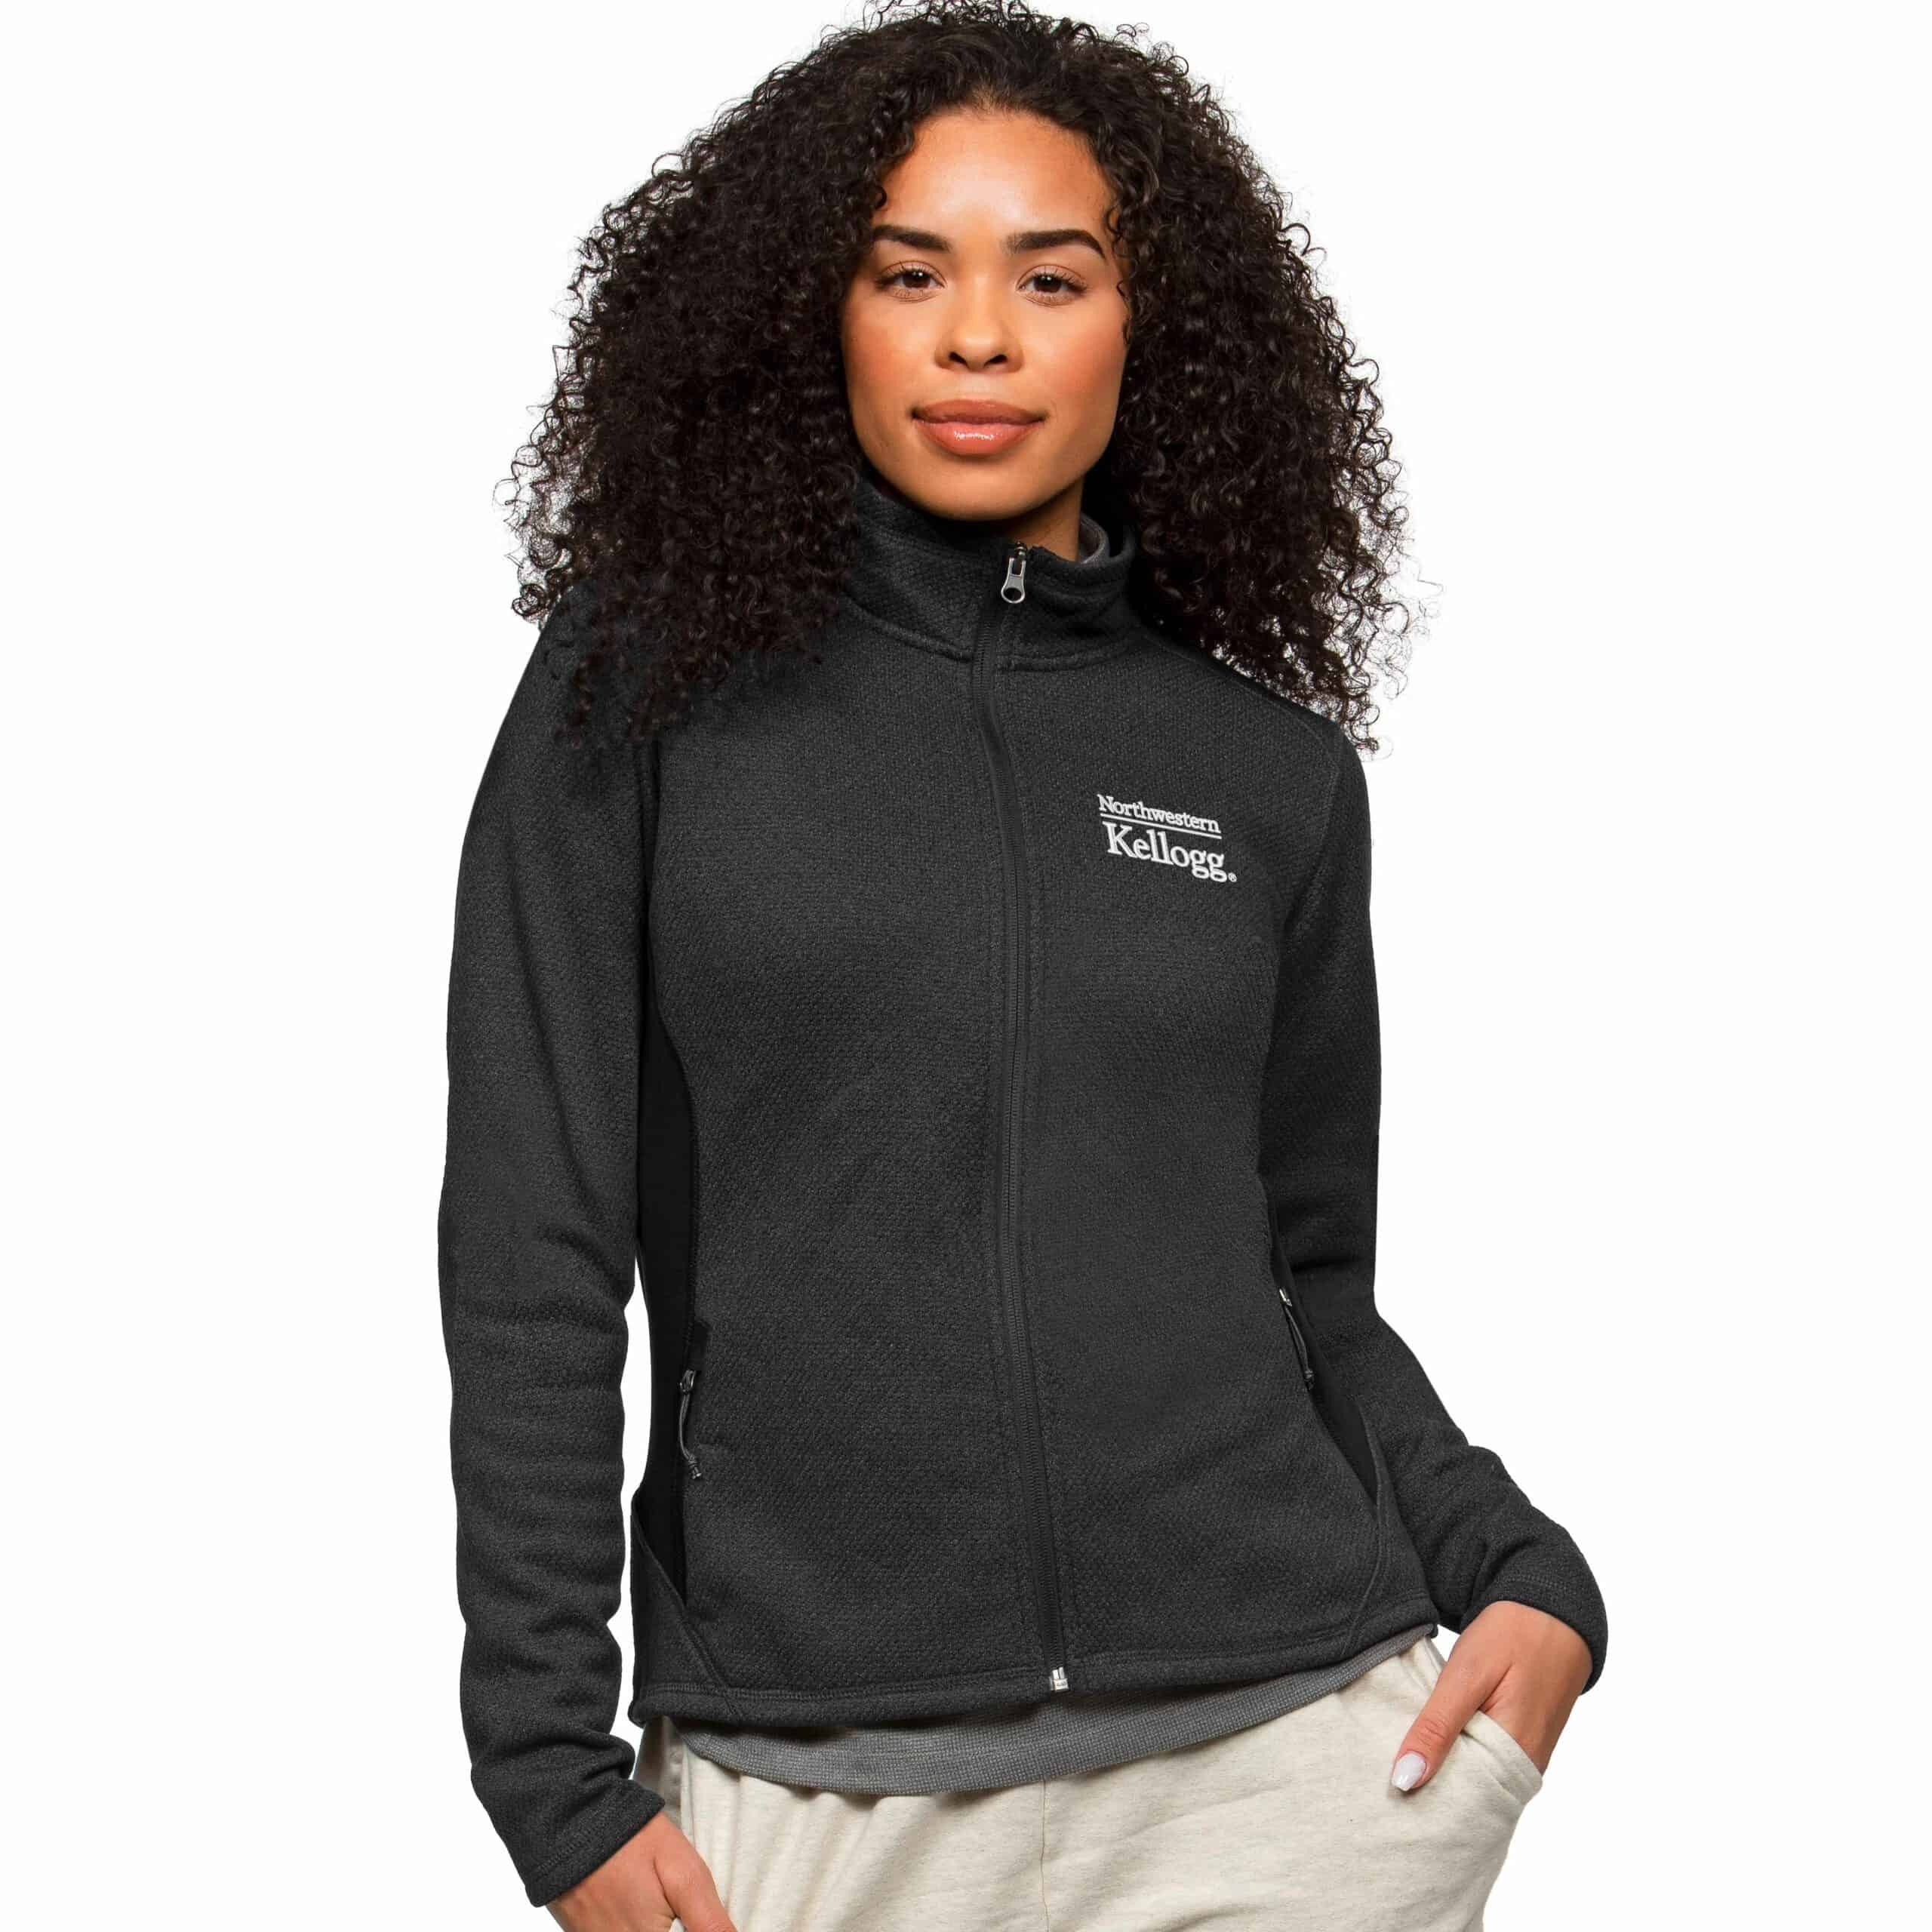 Kellogg Women's Antigua Course Jacket in Black Heather Multi